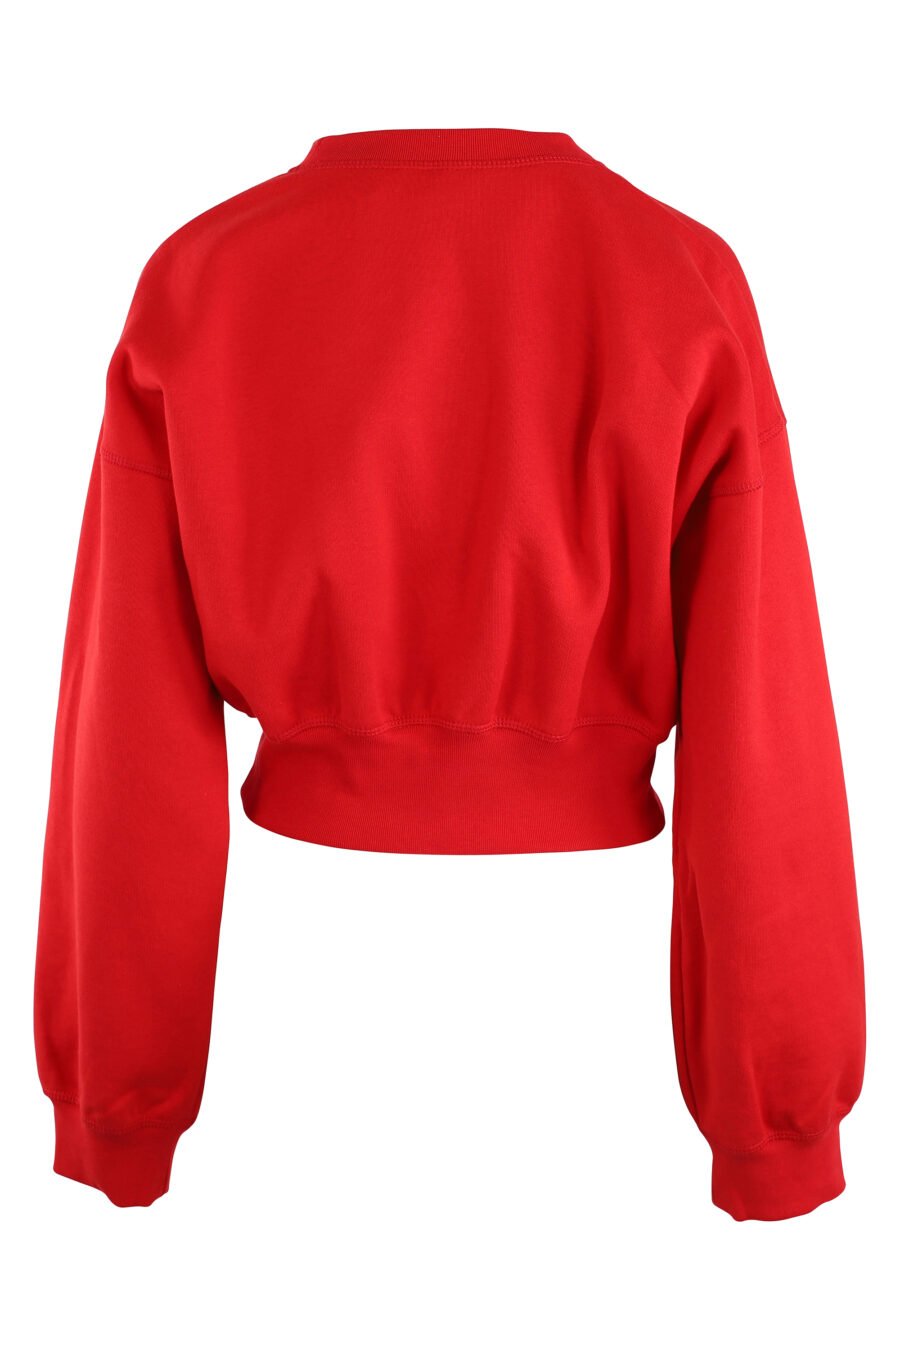 Orange sweatshirt with centred mini logo and wide sleeves - IMG 9125